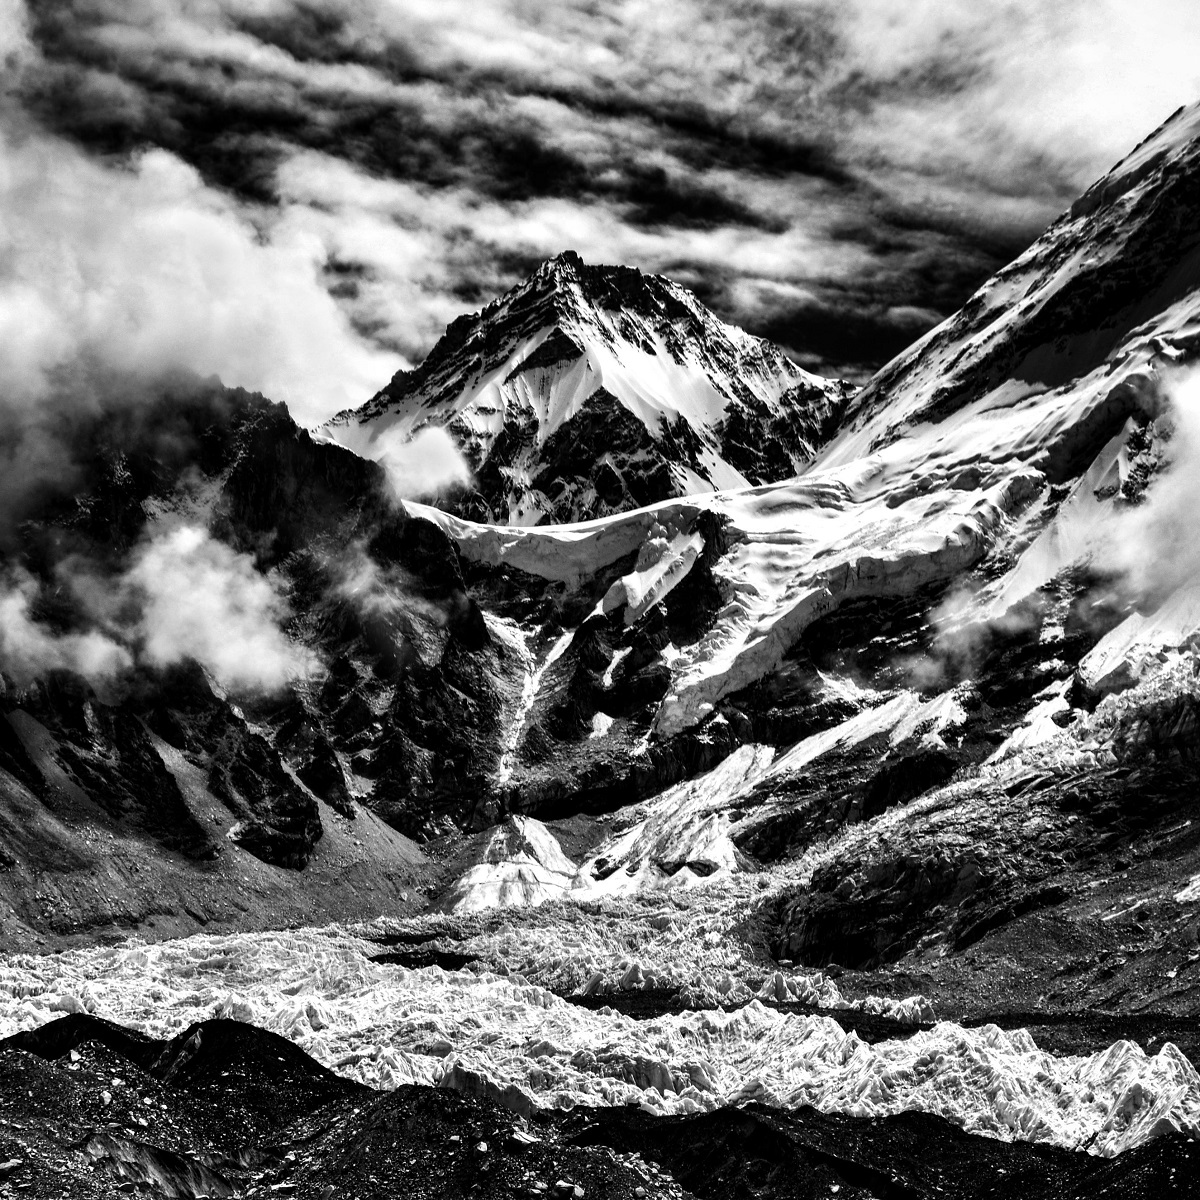 The Himalayas's majestic beauty through Vietnamese photographer's lens